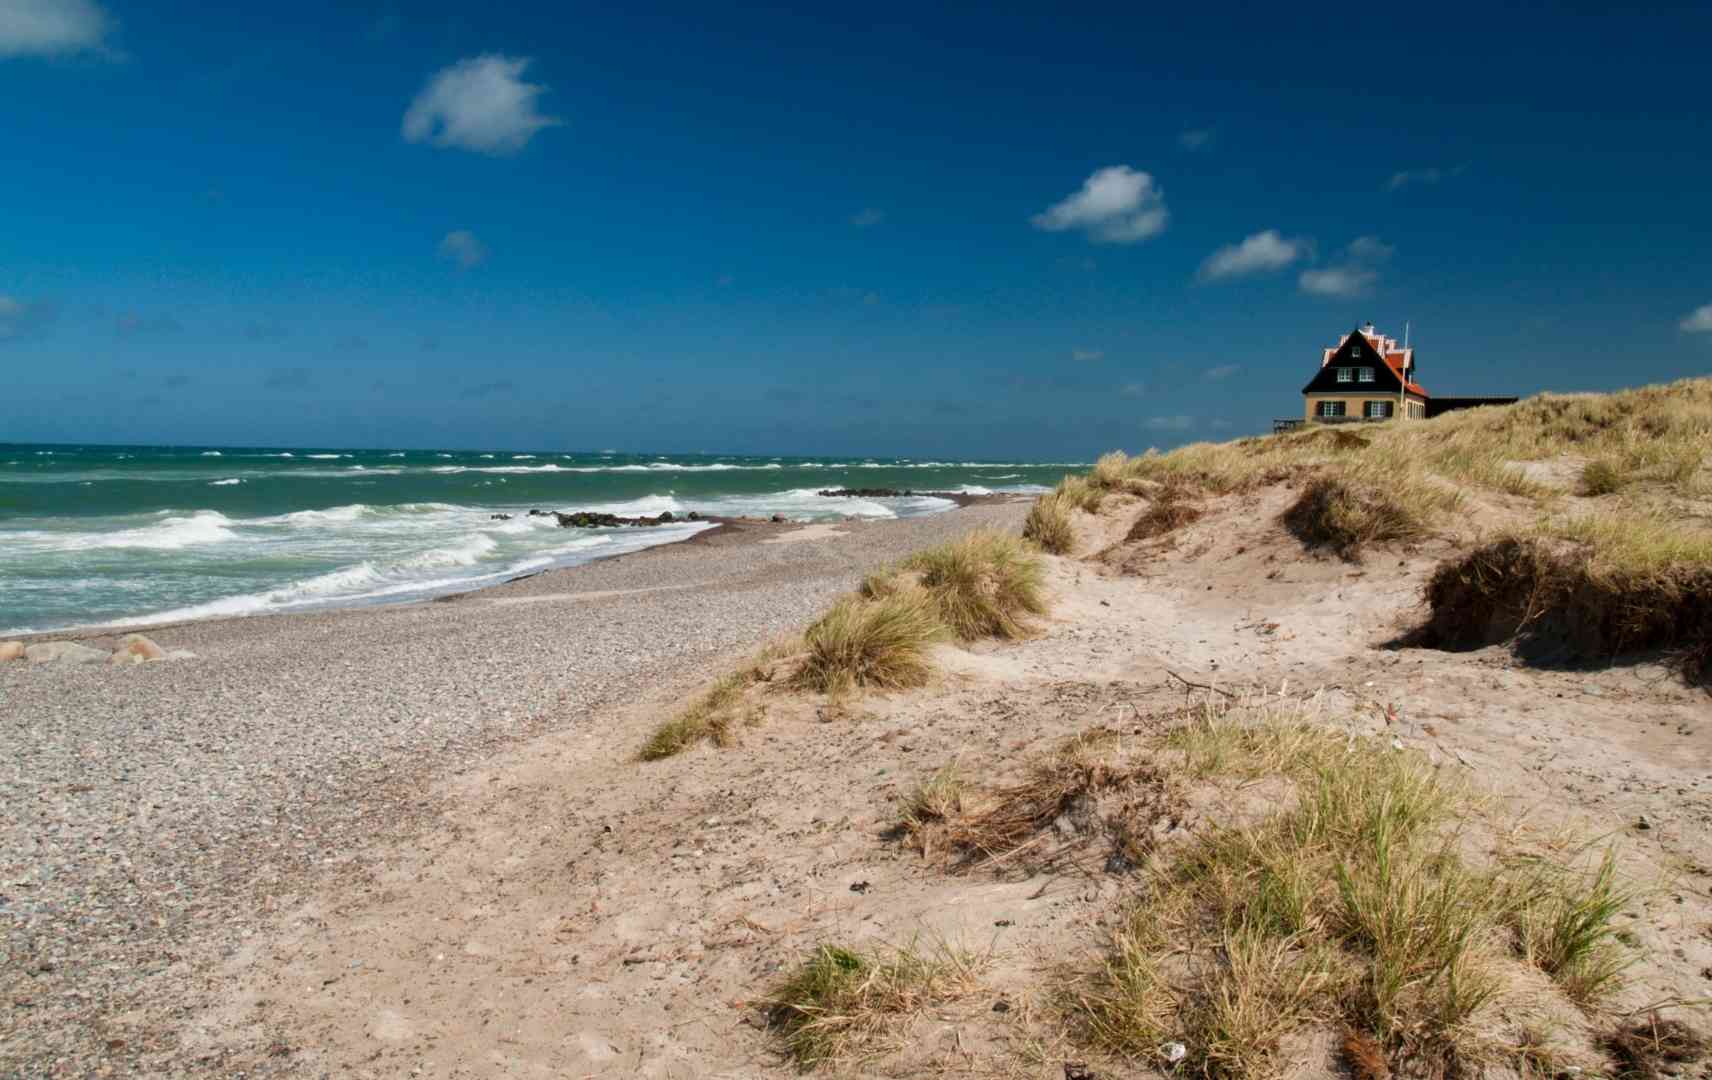 Haus am Strand in Dänemark